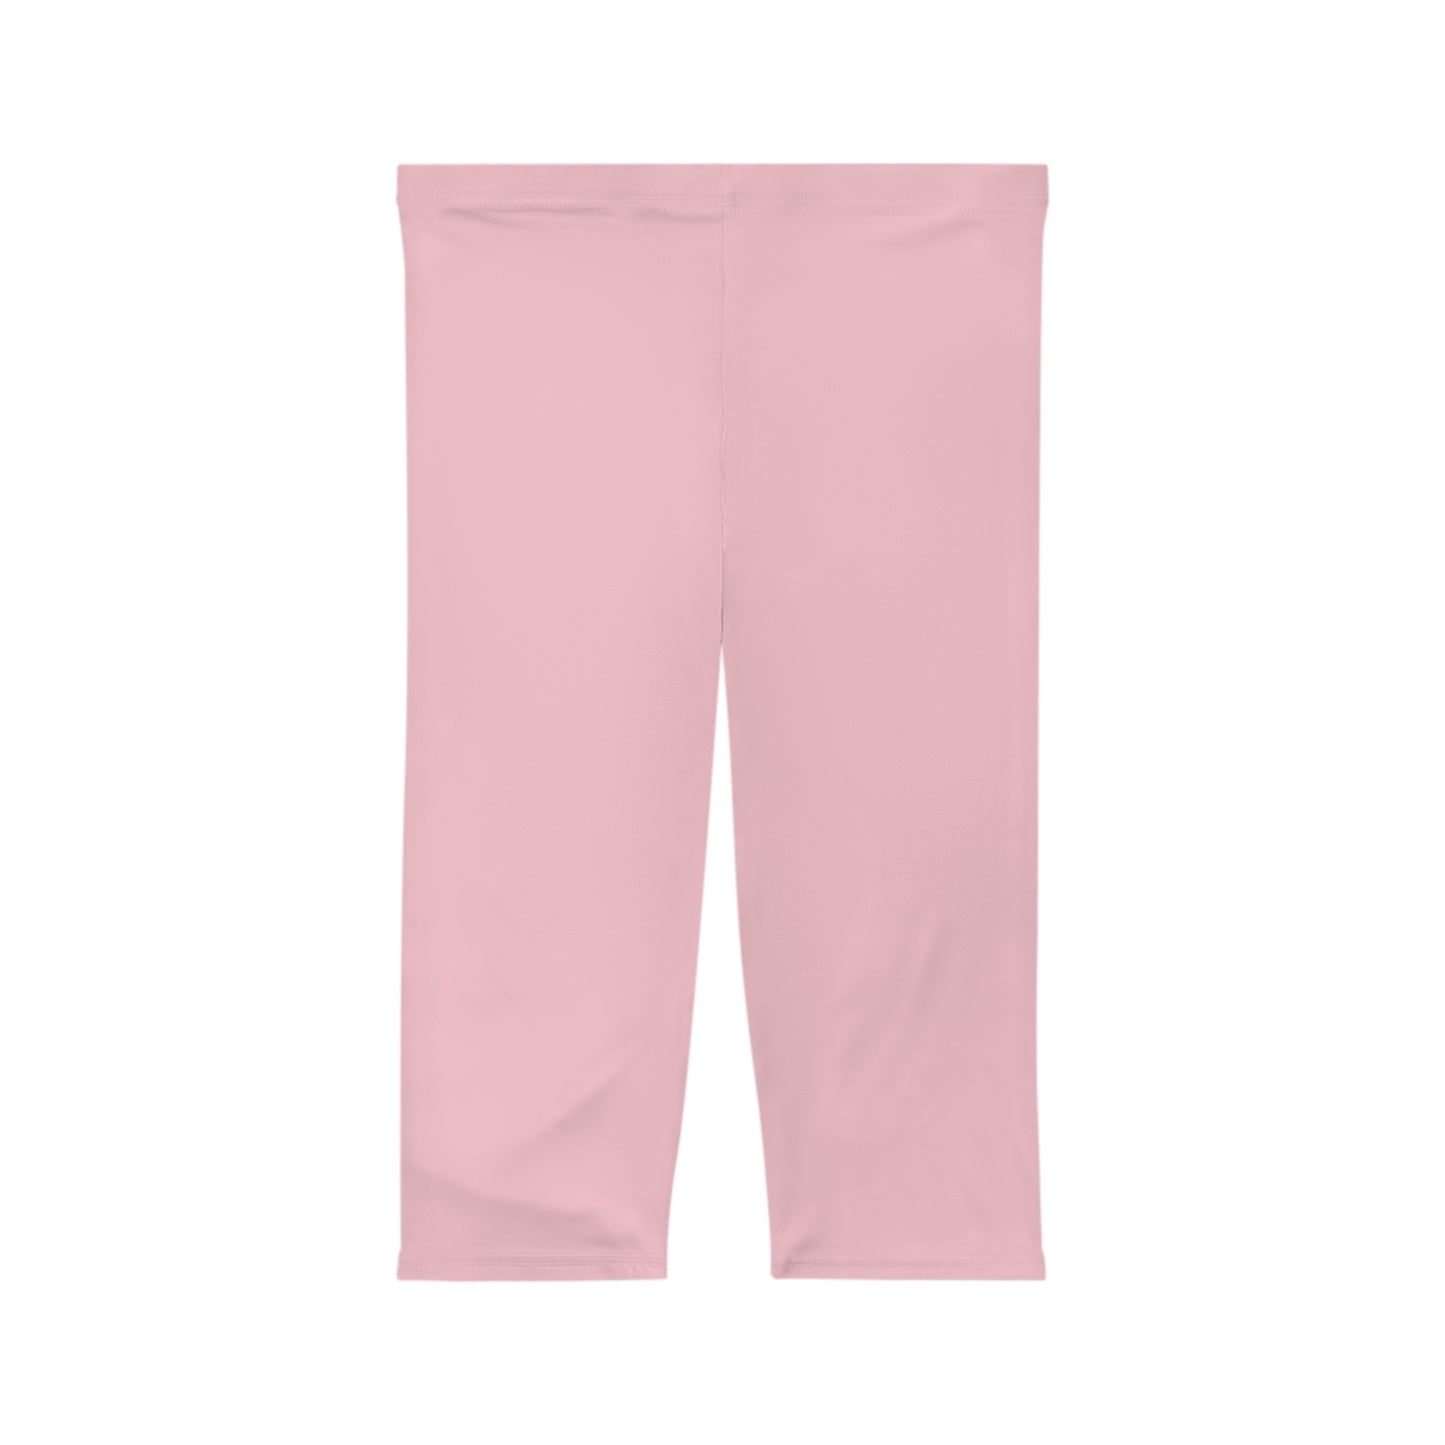 FFCCD4 Light Pink - Capri Shorts